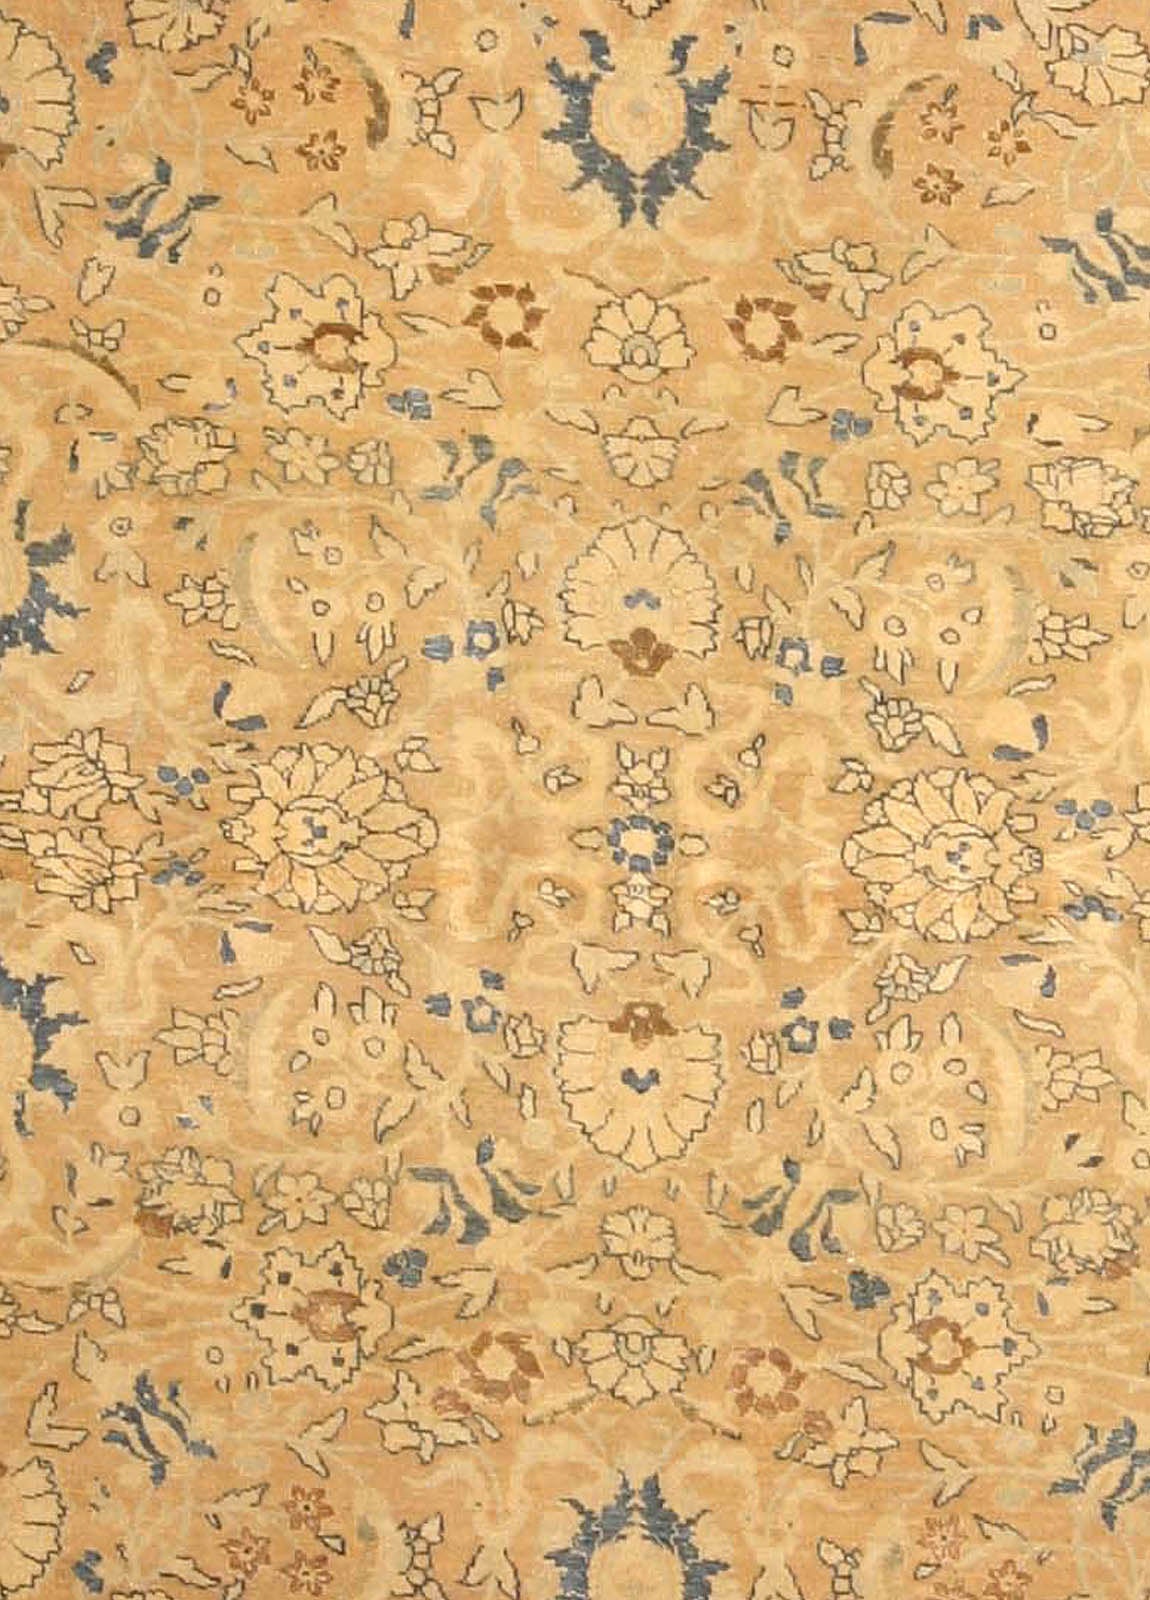 Authentic 19th Century Persian Tabriz Handmade Wool Rug
Size: 11'4